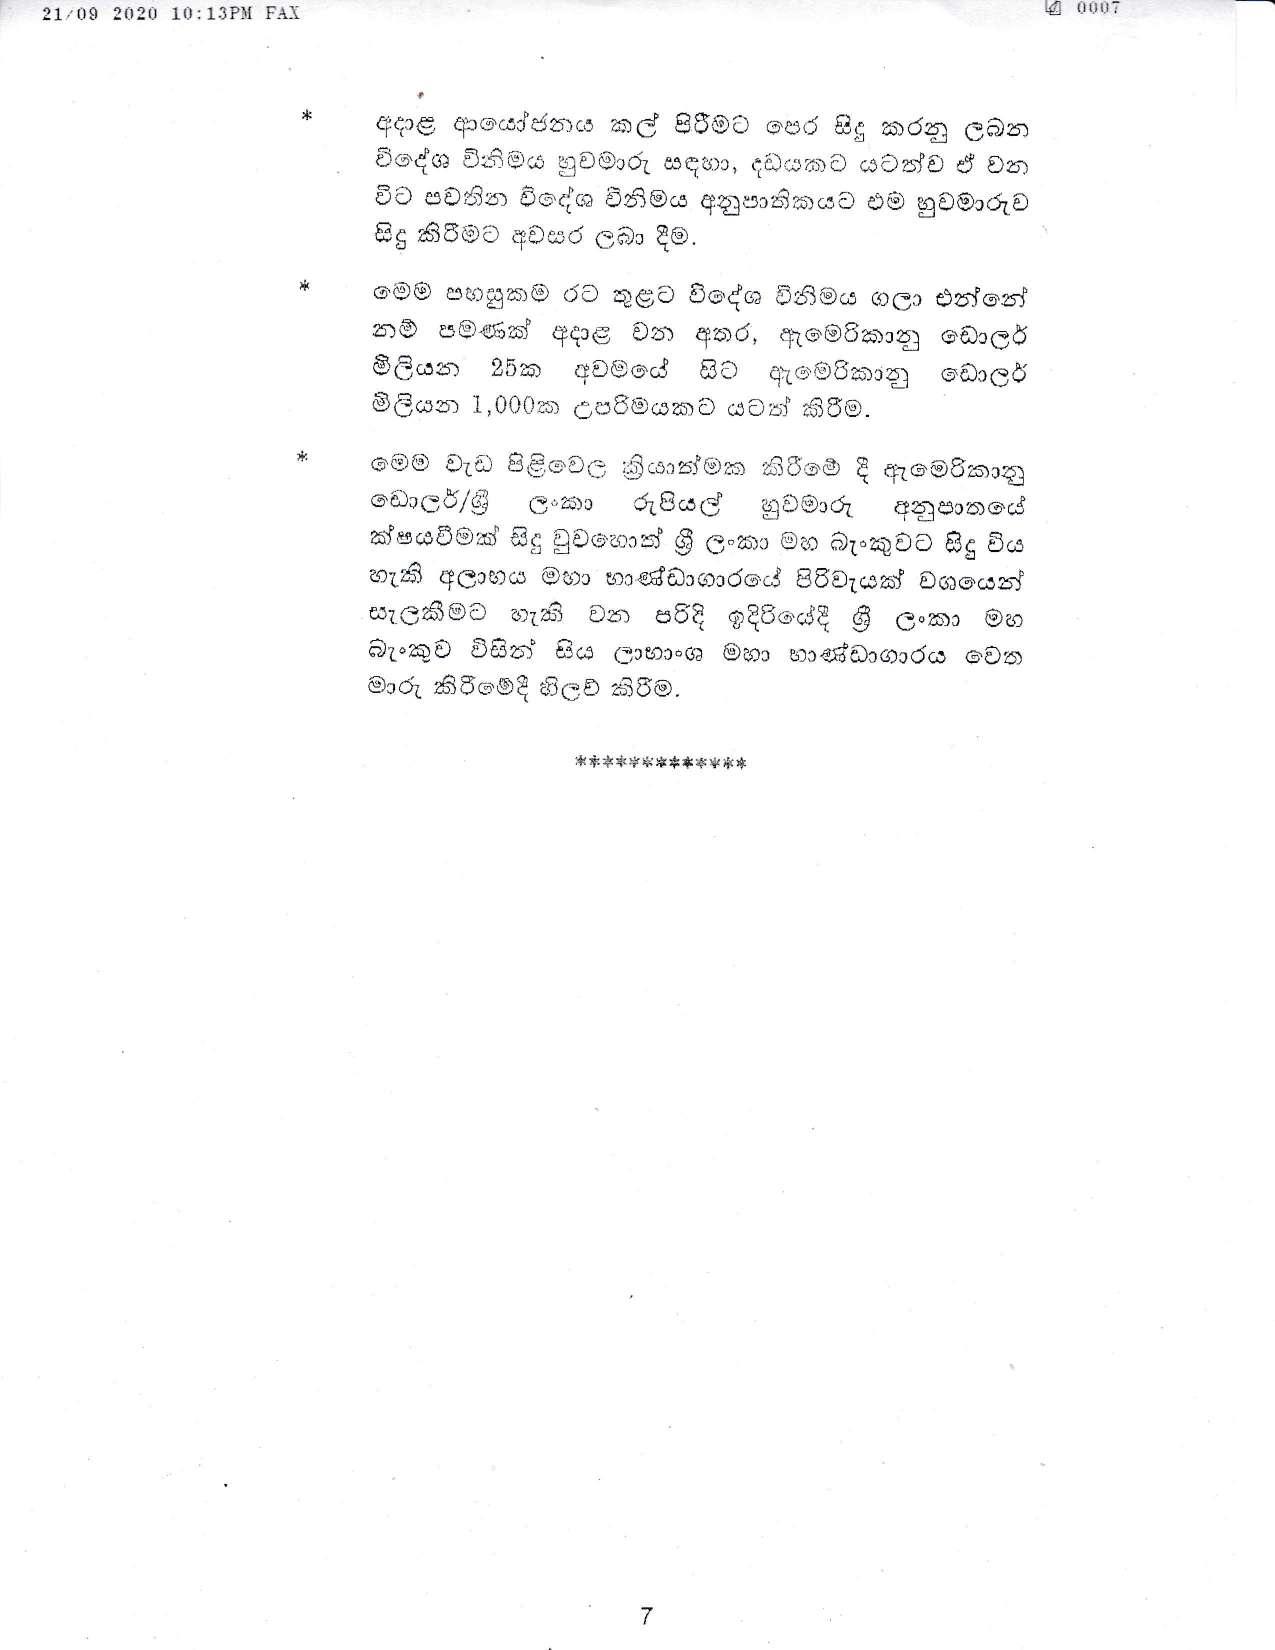 Cabinet Desicion on 21.09.2020 Sinhala page 007